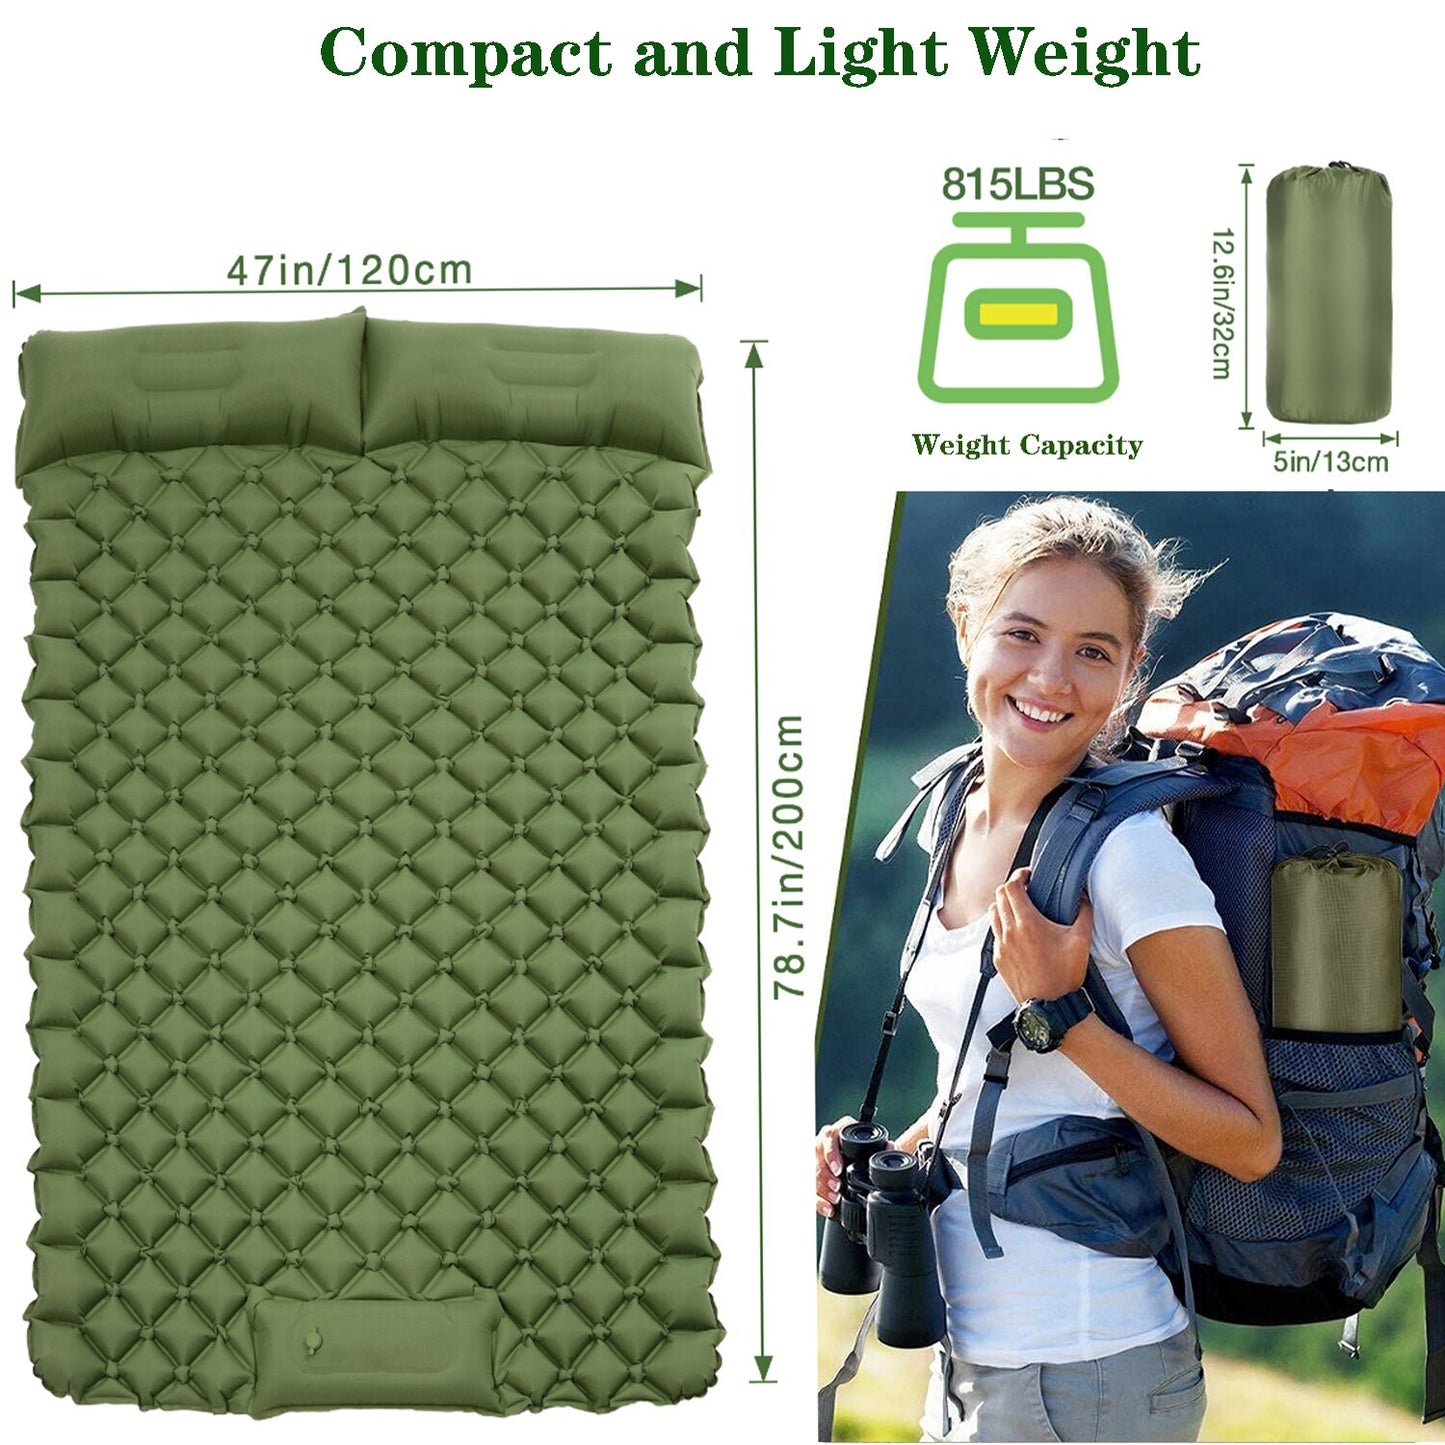 Camping Ultralight Inflatable Mattress